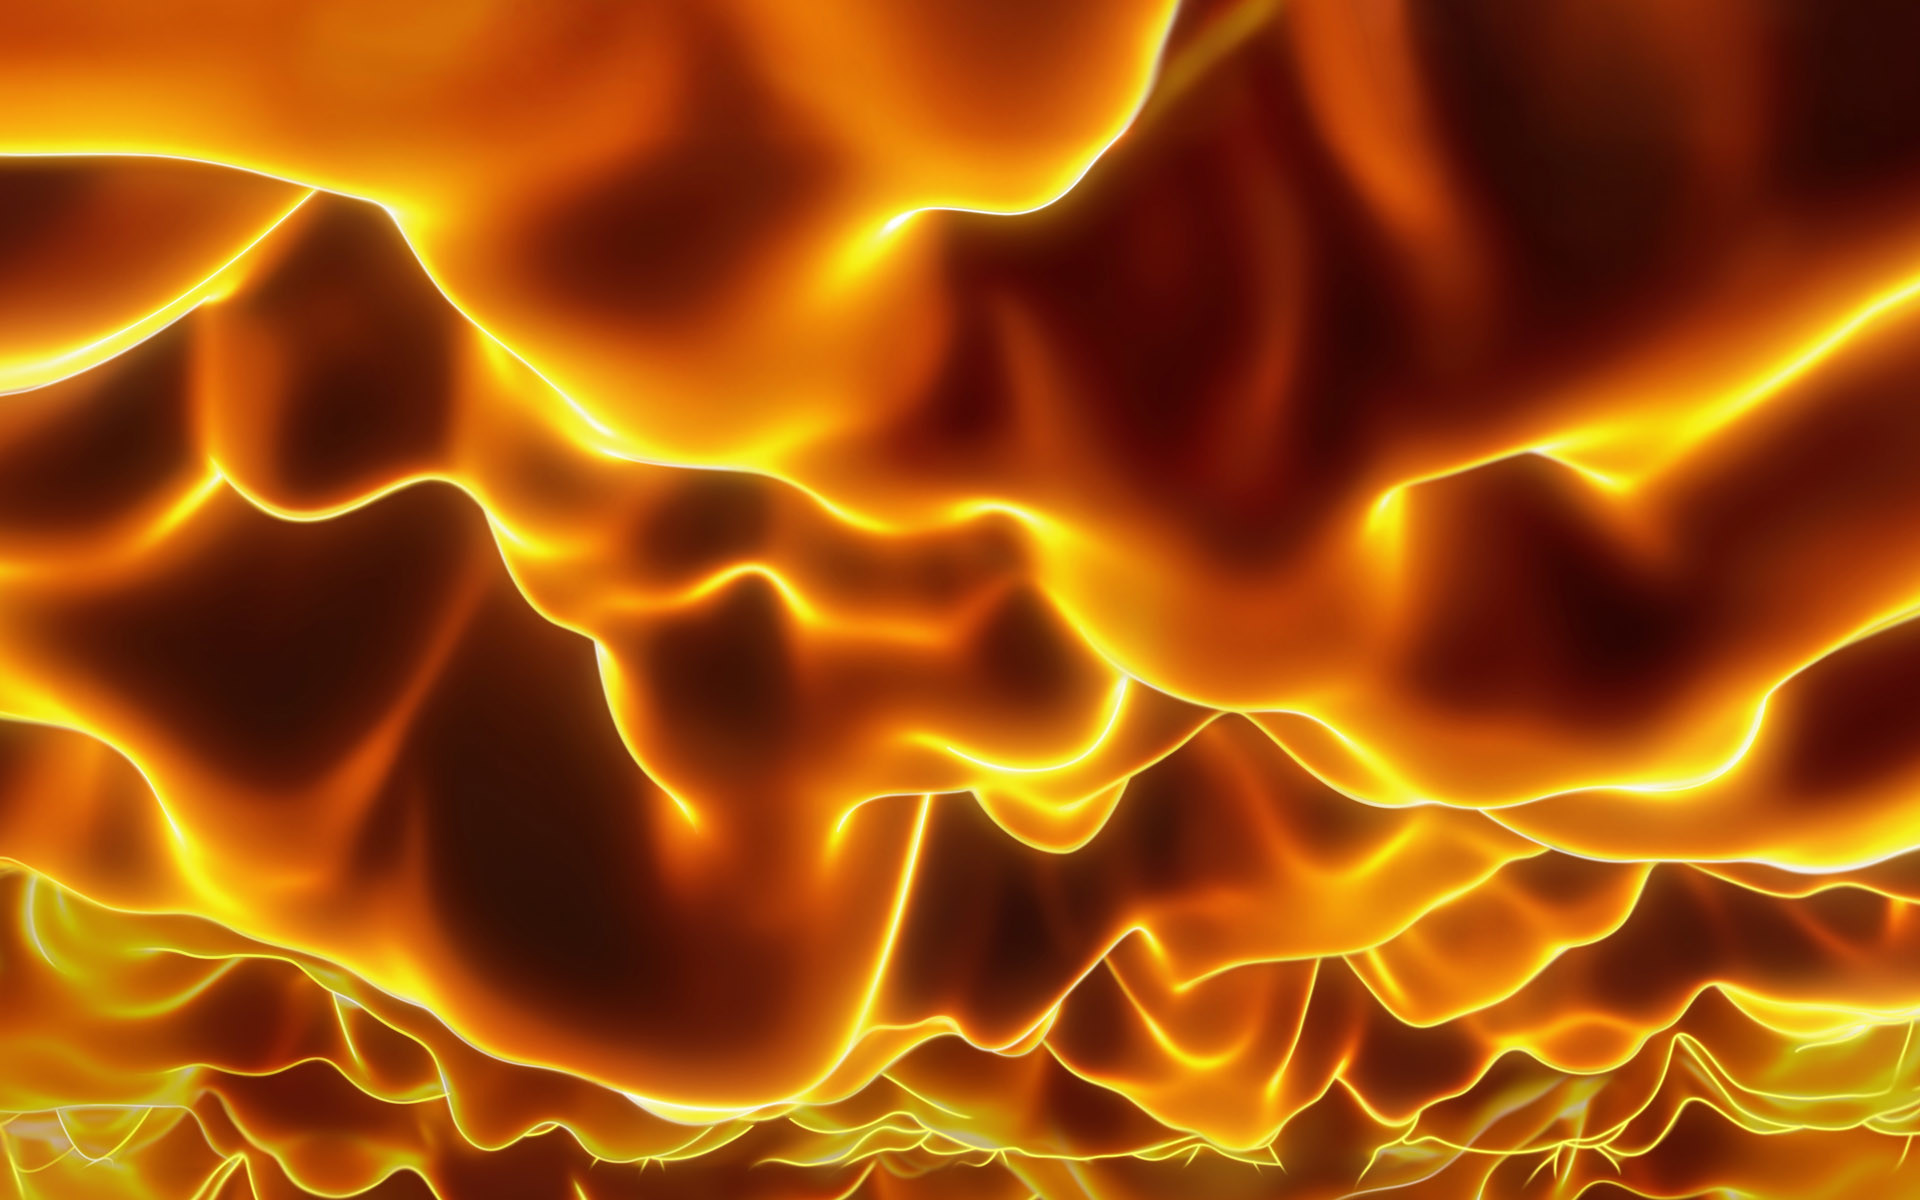 Animated Fire Desktop Wallpaper (51+ images)